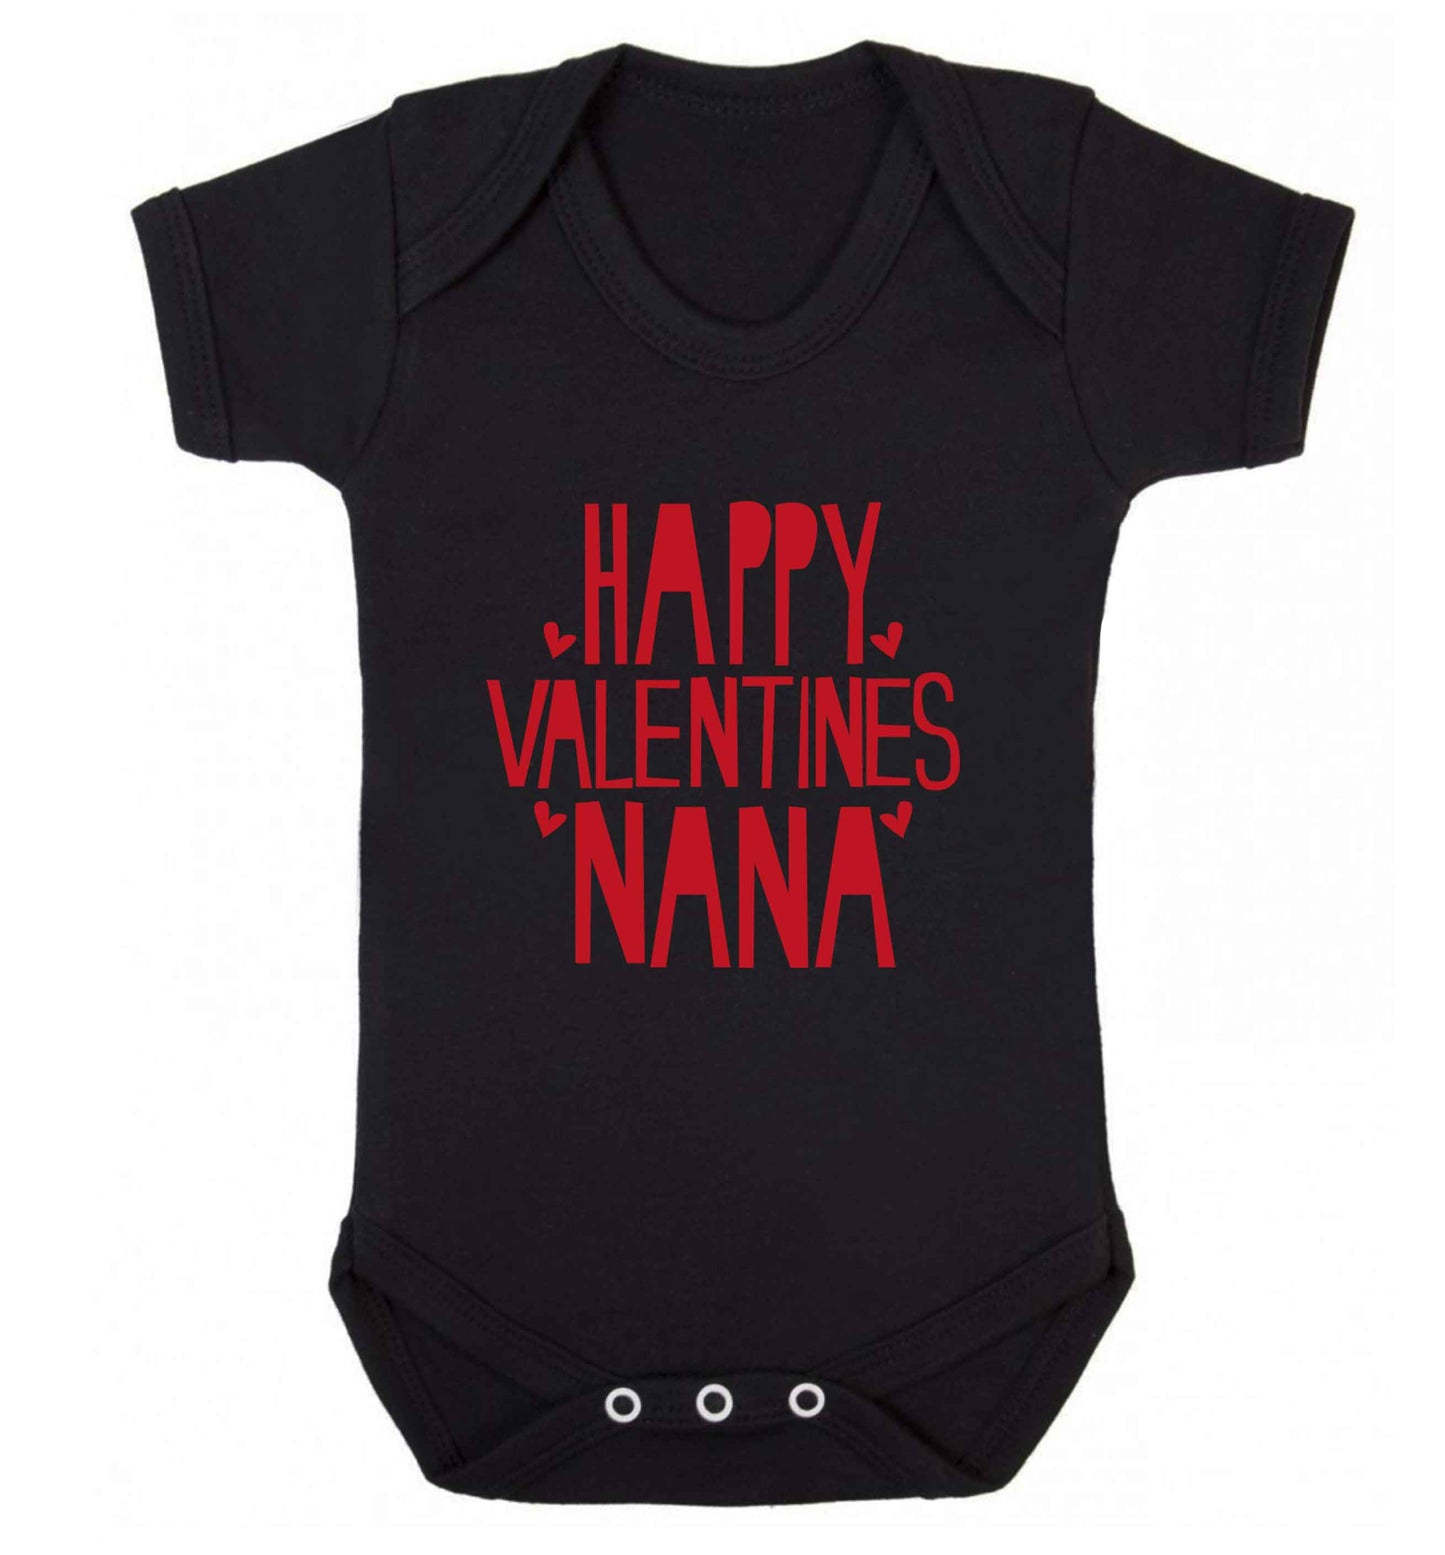 Happy valentines nana baby vest black 18-24 months